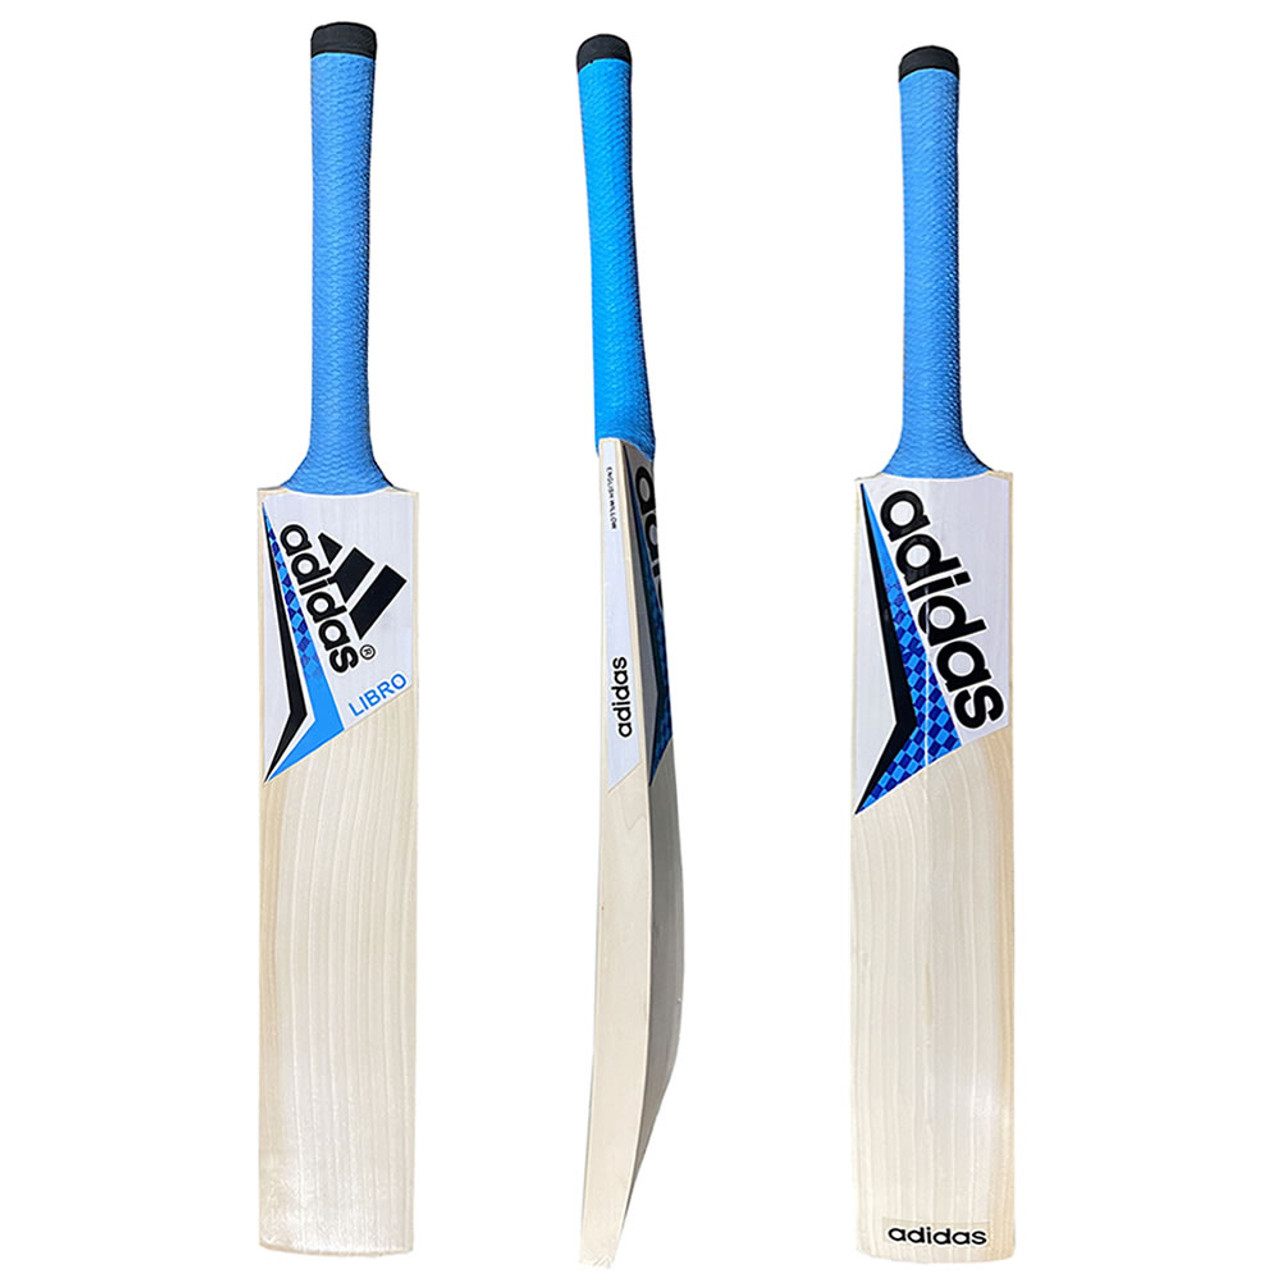 adidas cricket bat cover